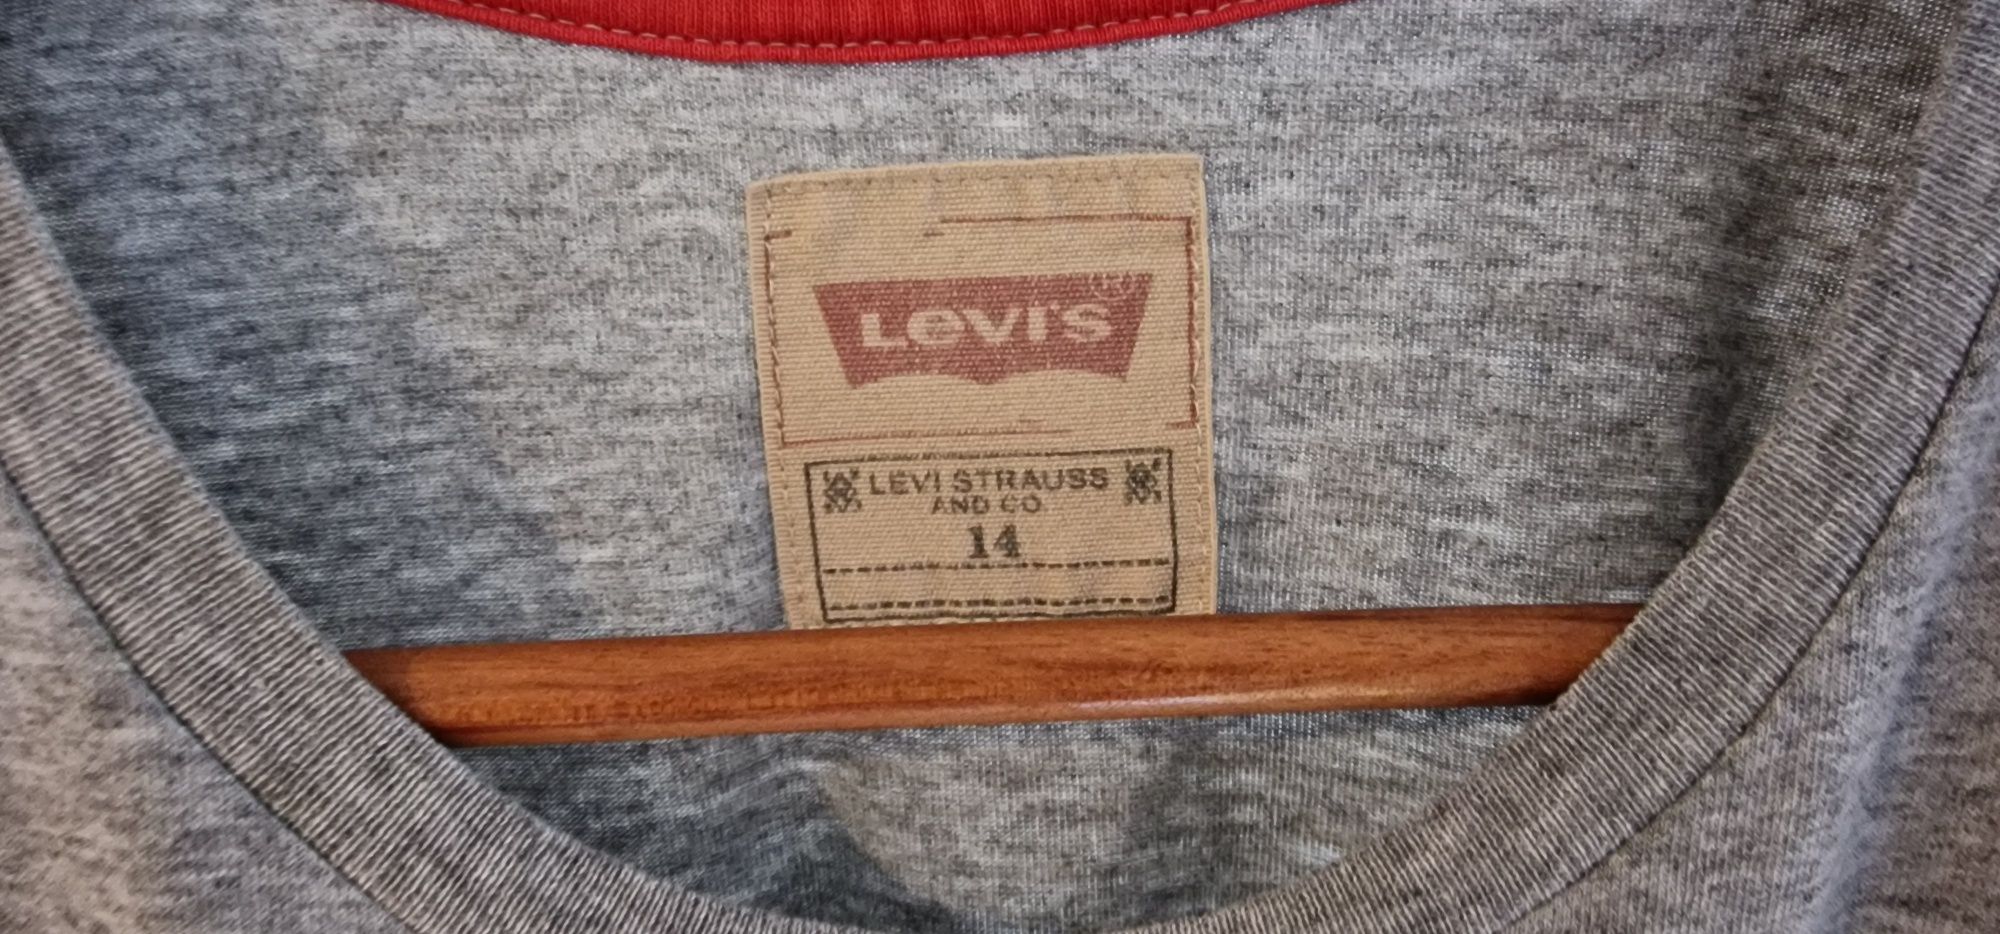 Tea shirt Levis cinza